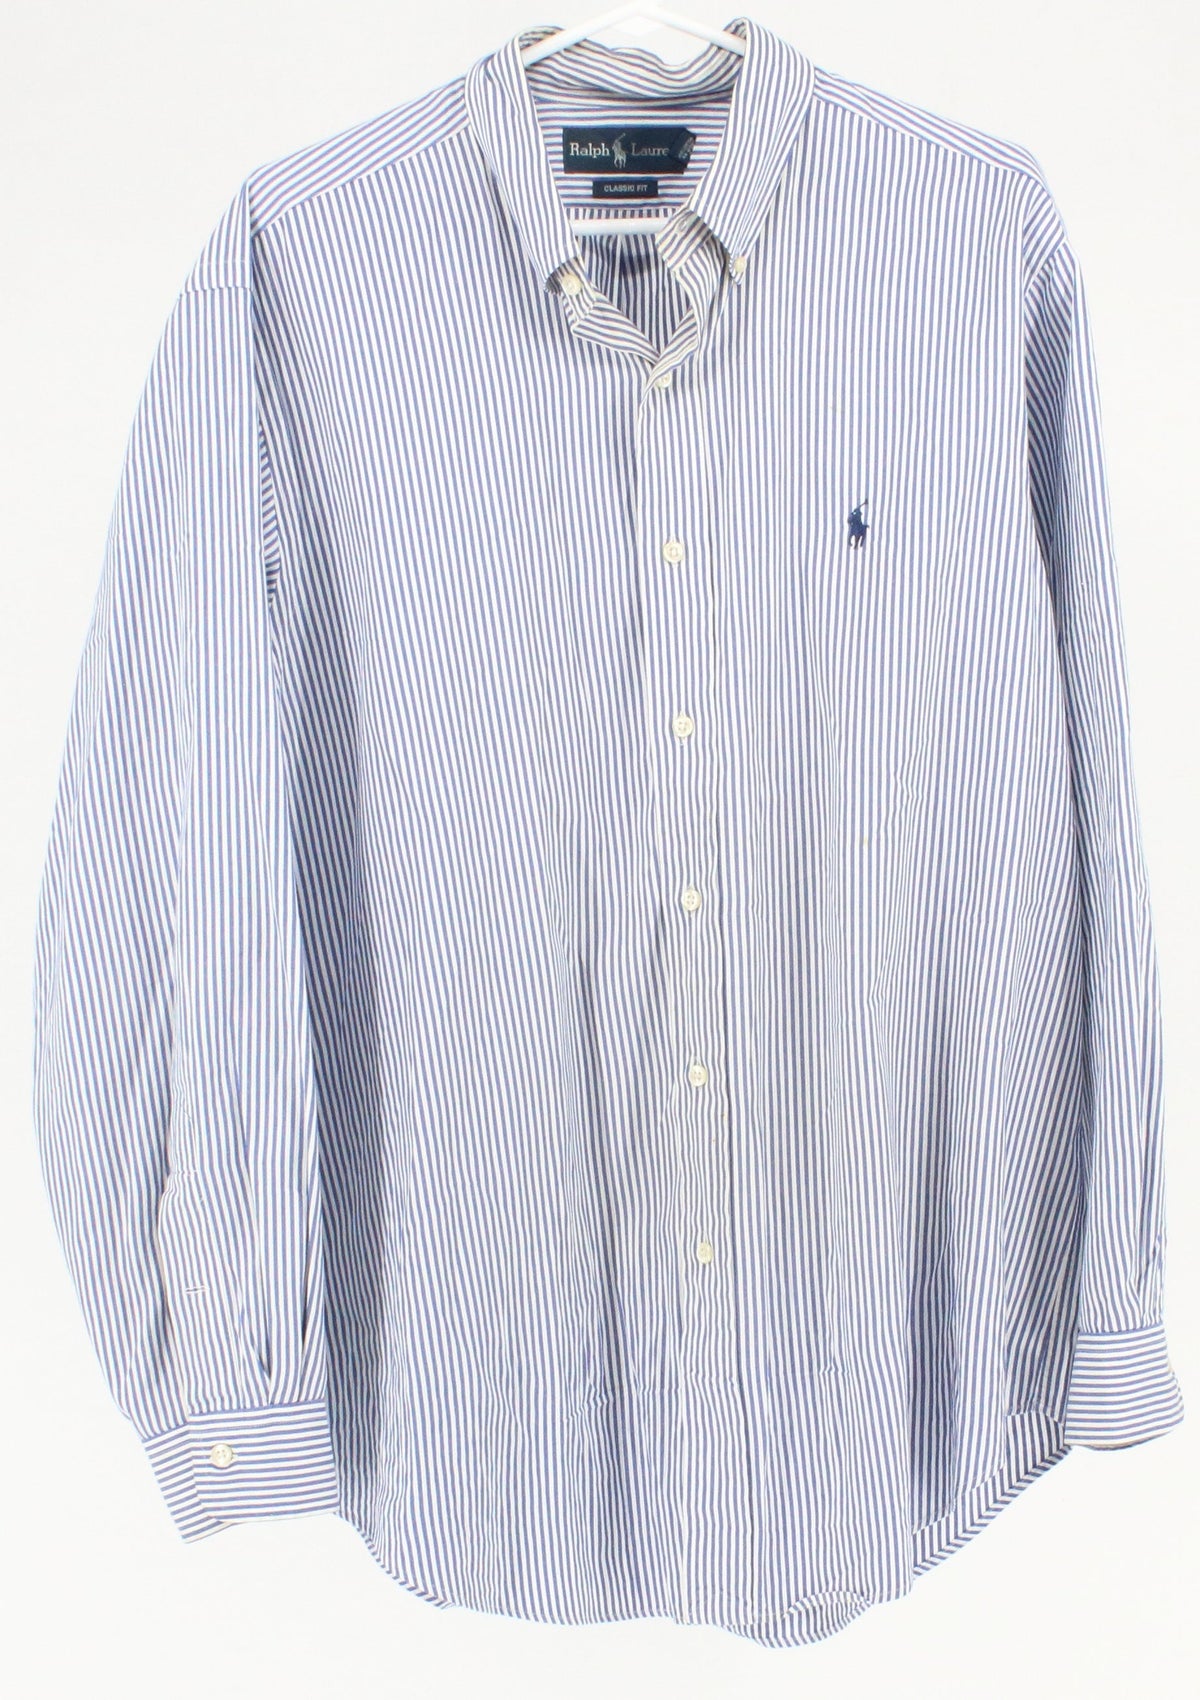 Ralph Lauren Classic Fit Blue & White Vertical Stripe Shirt